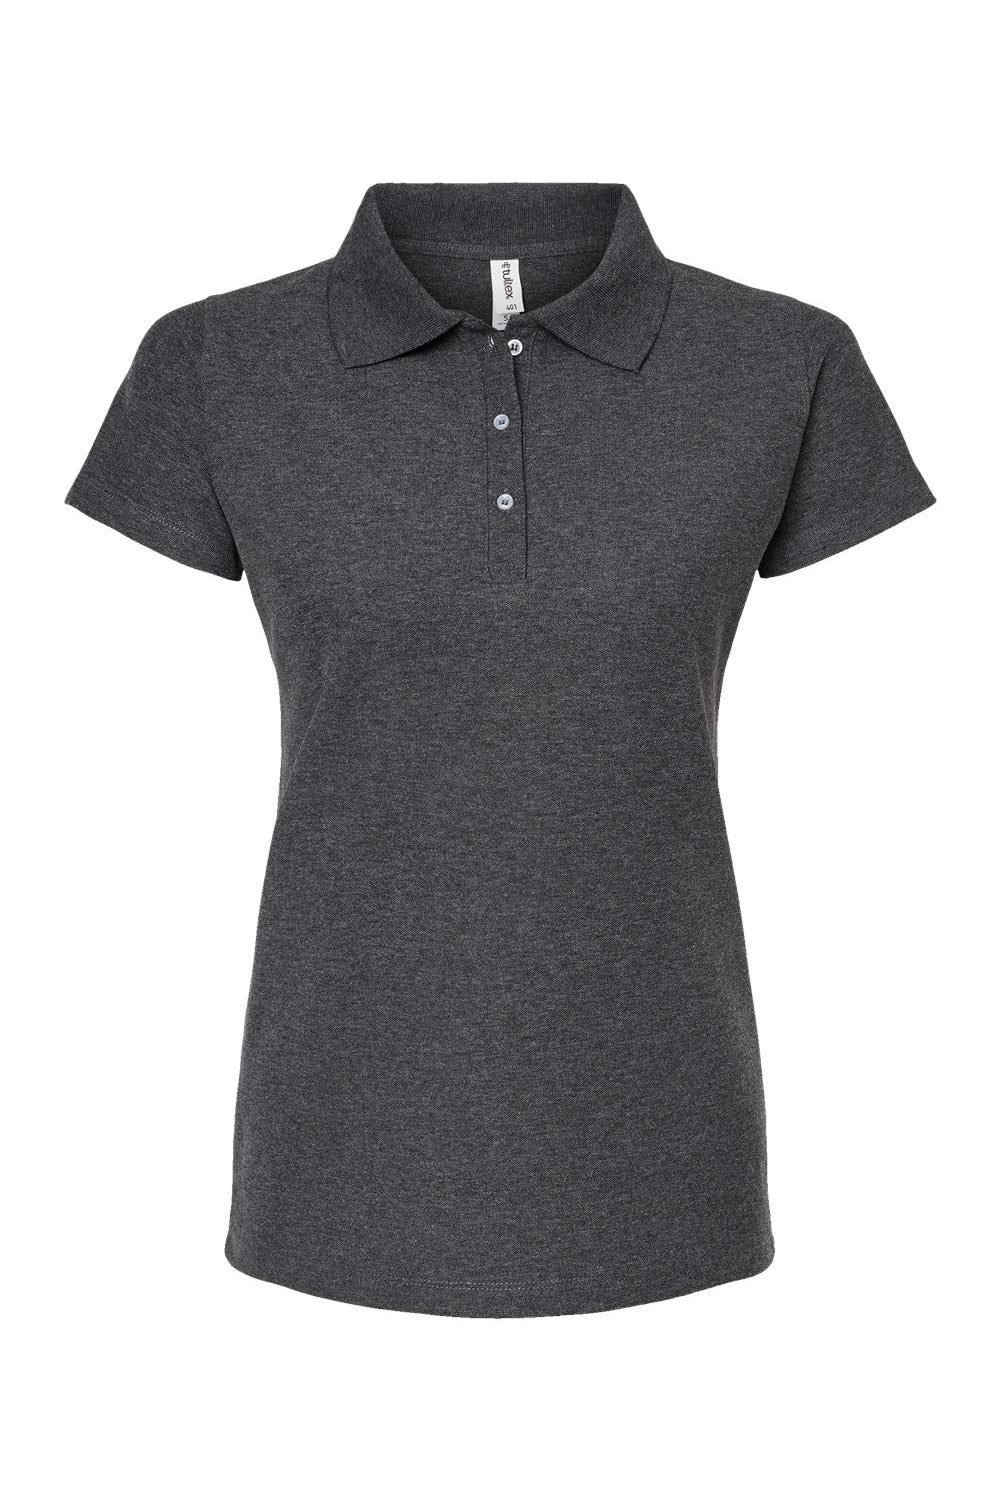 Tultex 401 Womens Sport Shirt Sleeve Polo Shirt Heather Charcoal Grey Flat Front